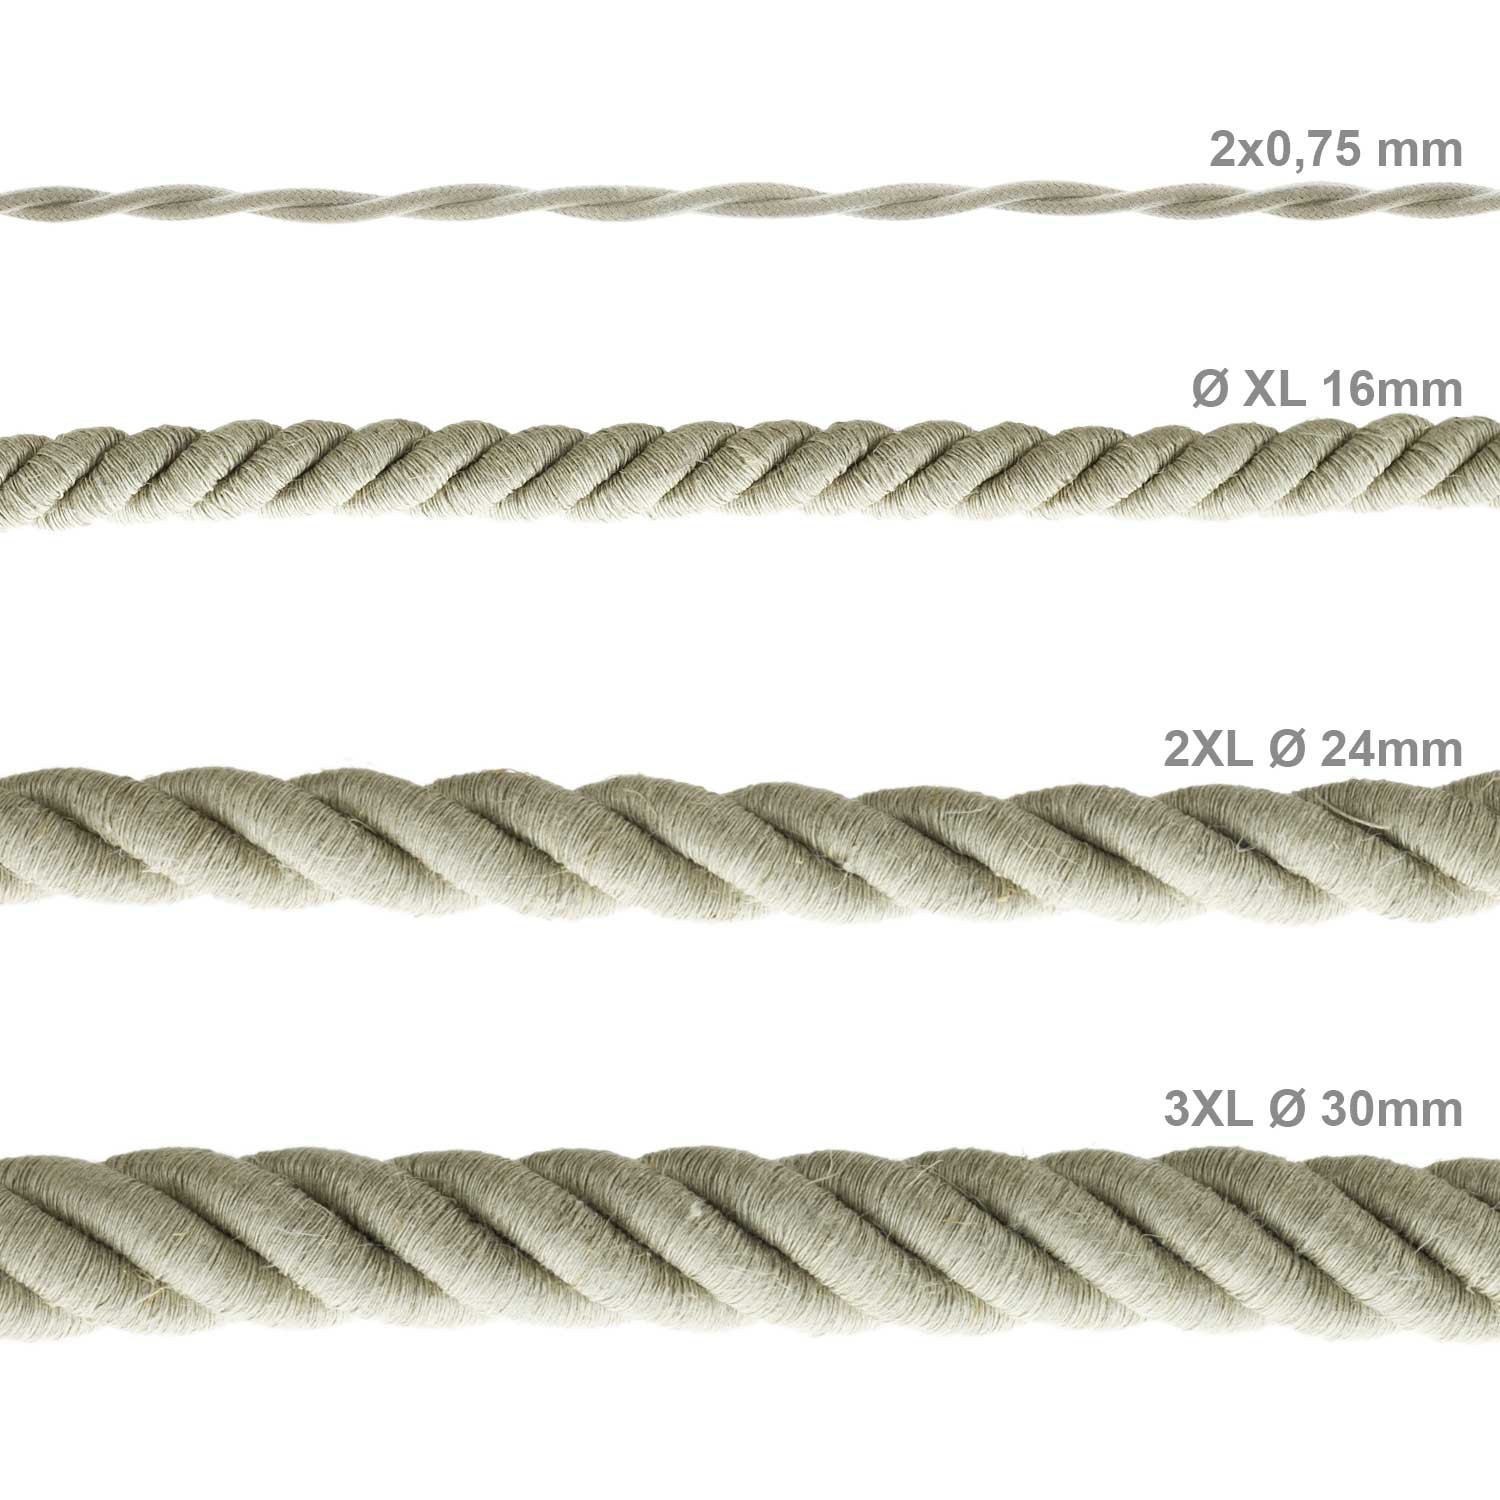 Cordón XL, cable eléctrico 3x0,75, recubierto en lino natural. Diámetro: 16mm.